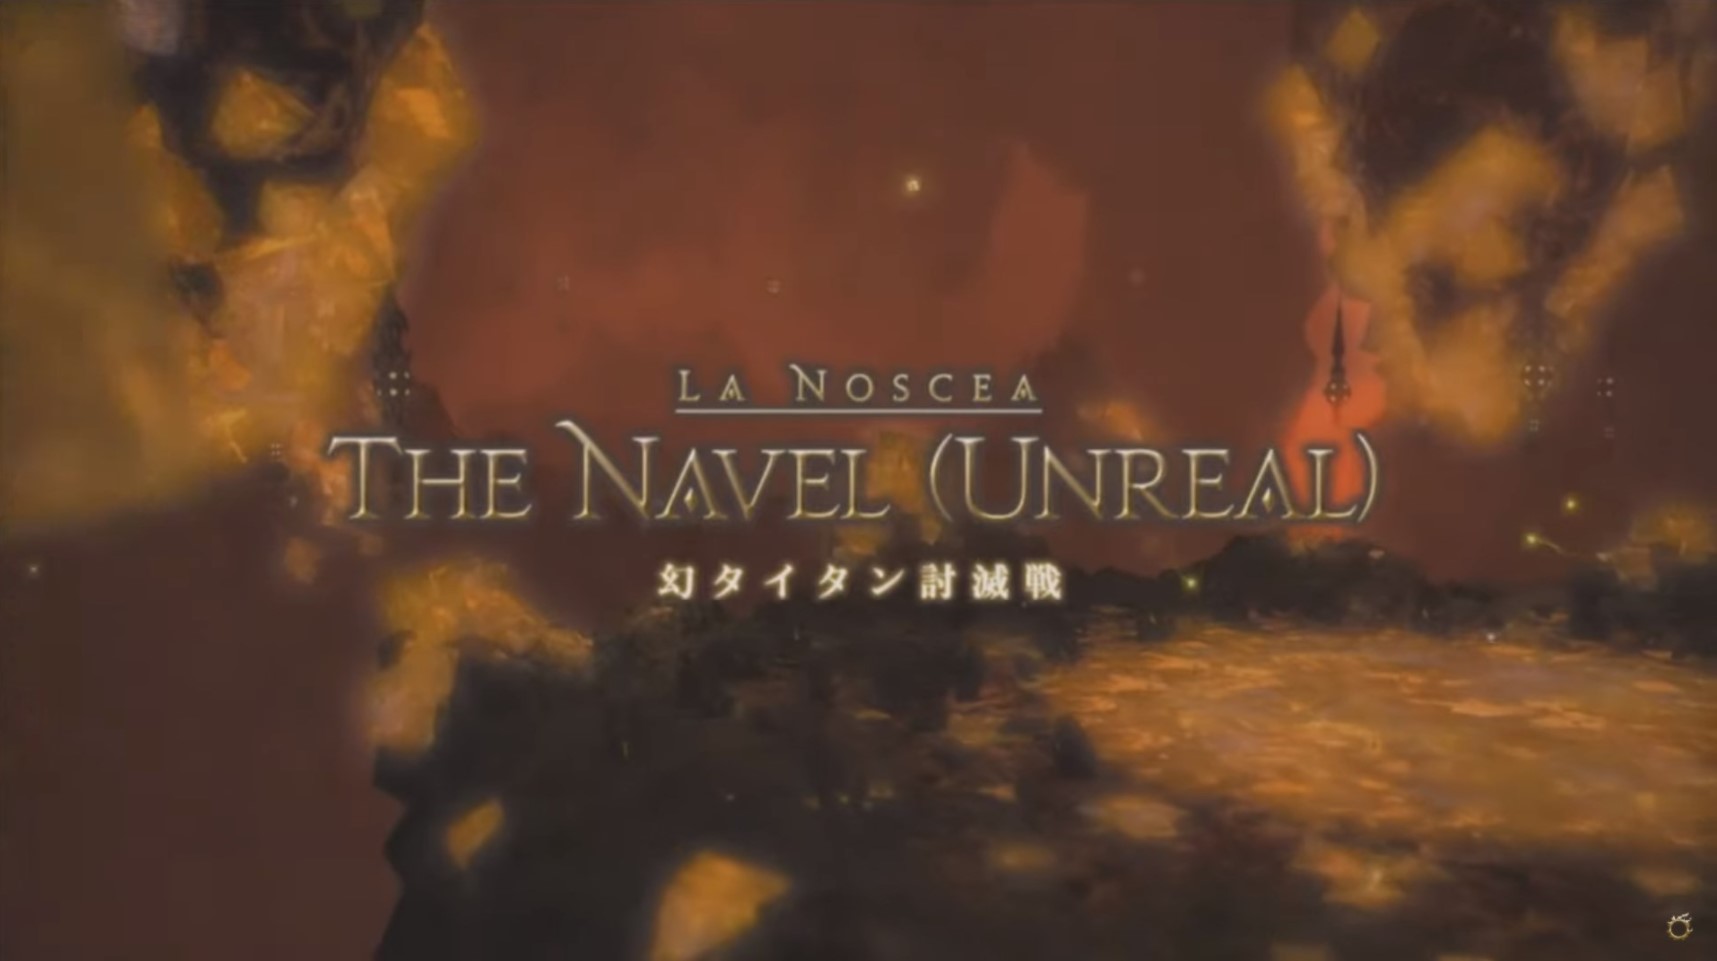 The Navel - Titan (Unreal)